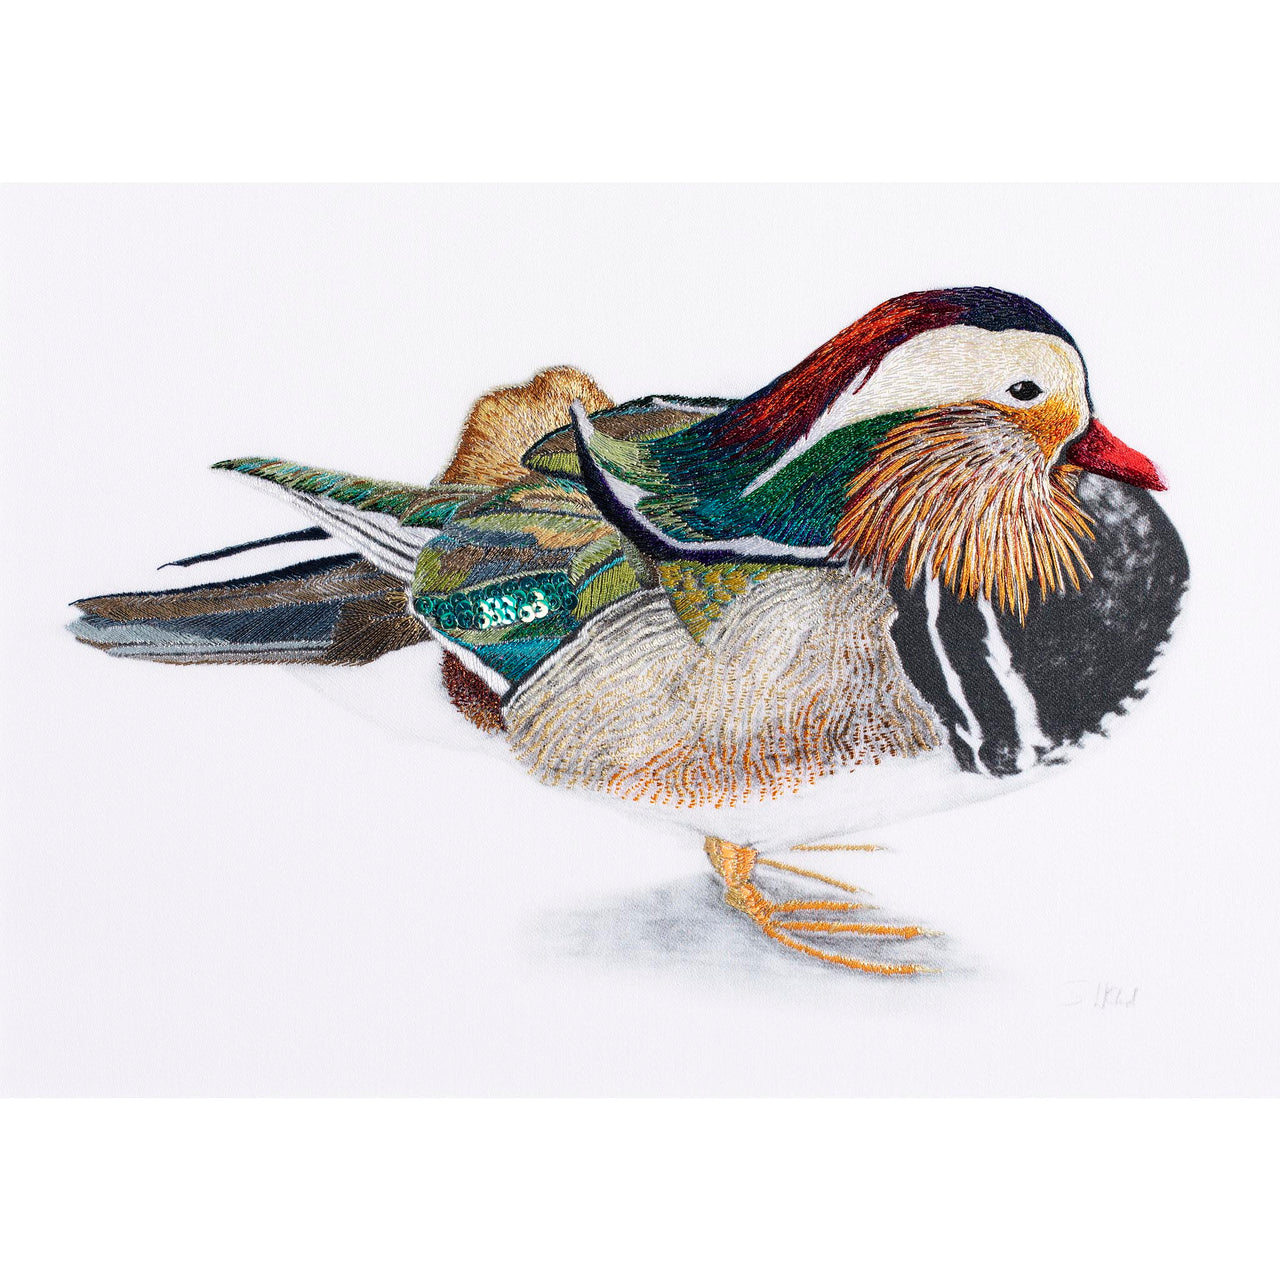 Mandarin duck original hand embroidered artwork 